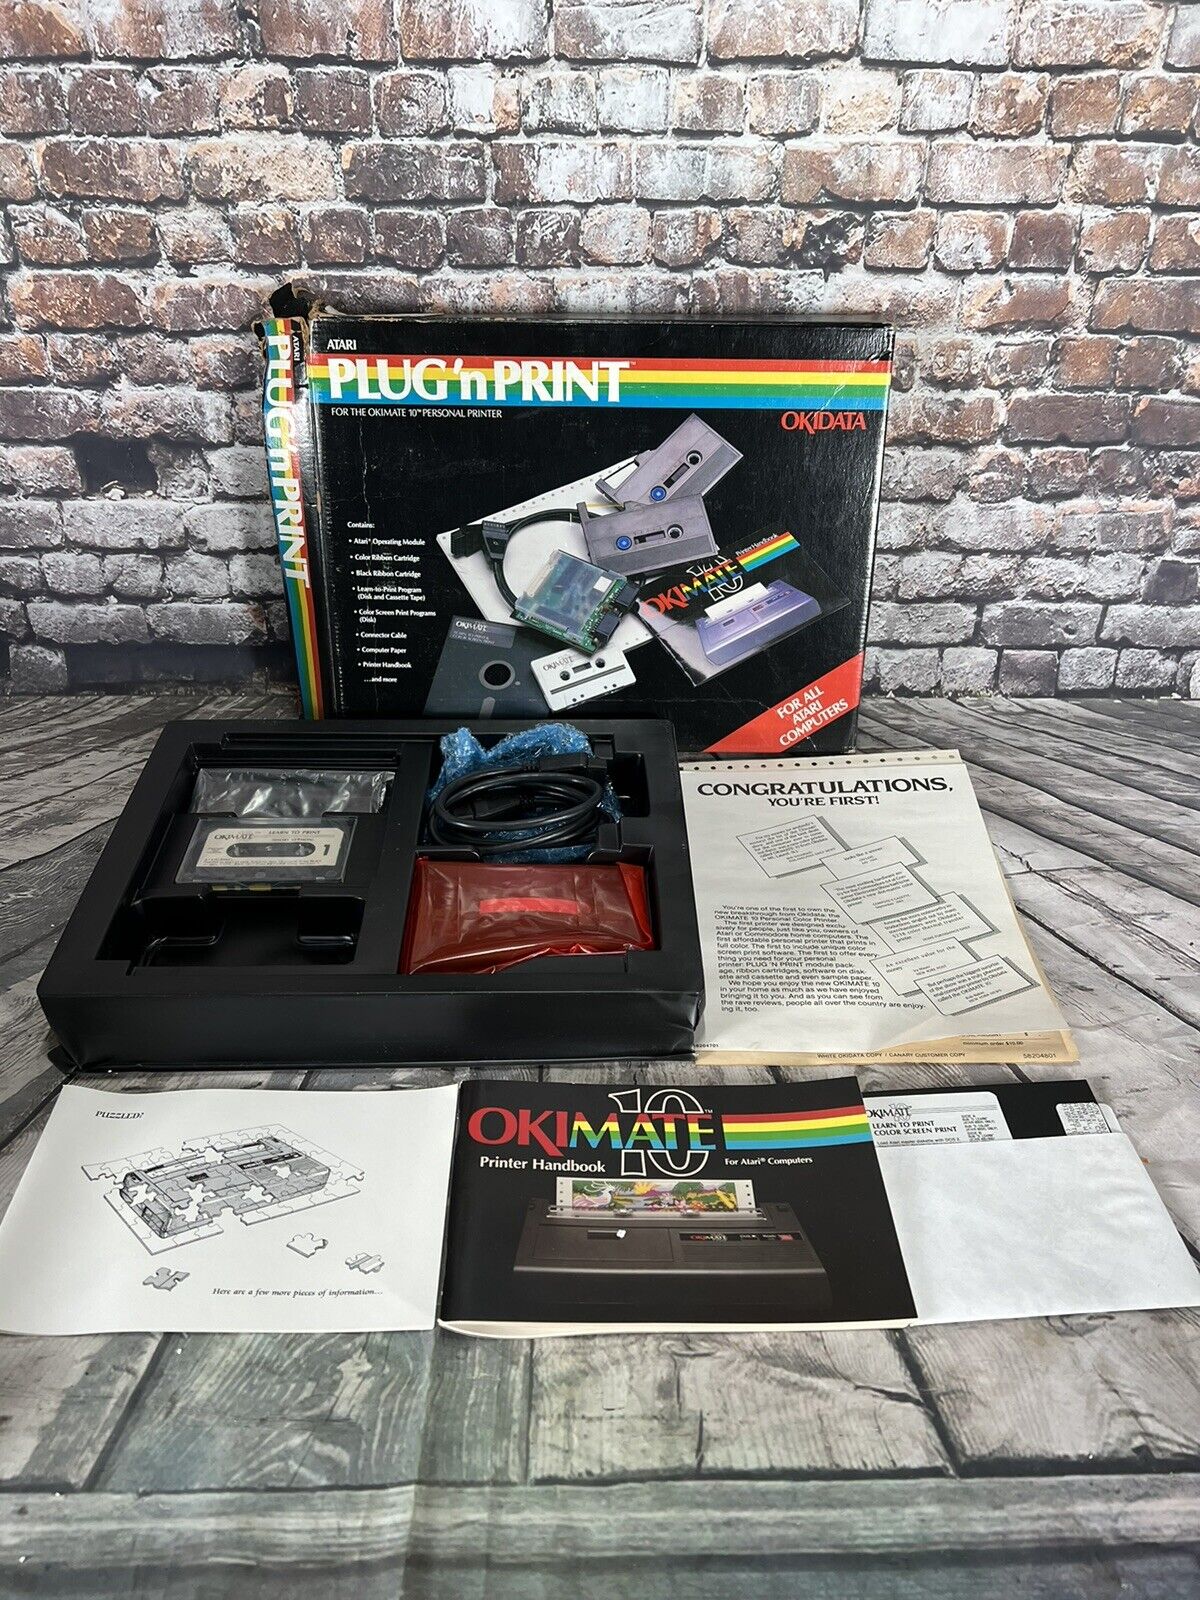 Okidata Okimate 10 The Personal Printer For Atari /Plug N Print Package New